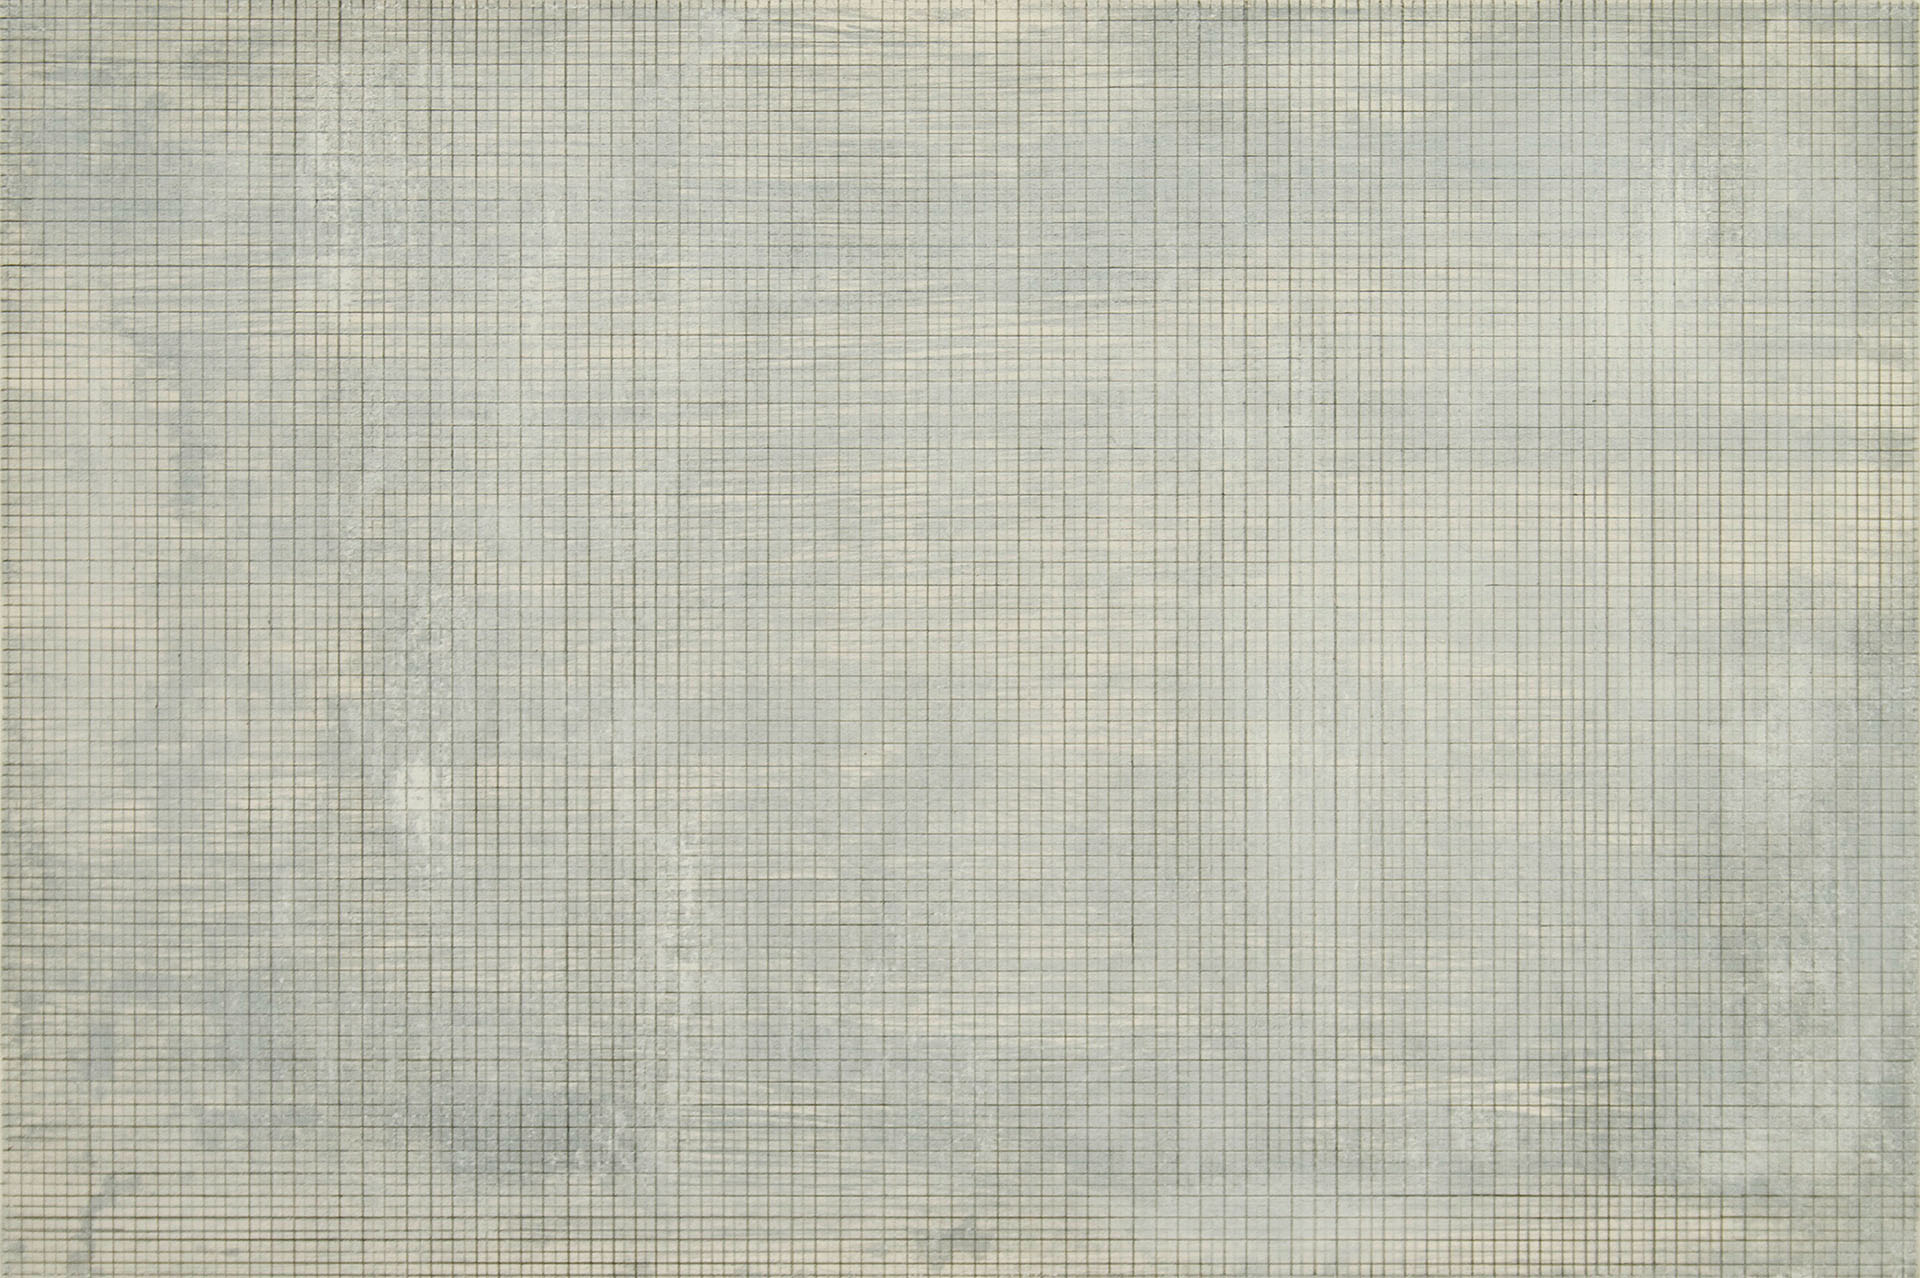  Grid 1, 2009, monotype & graphite, 220 x 335mm 